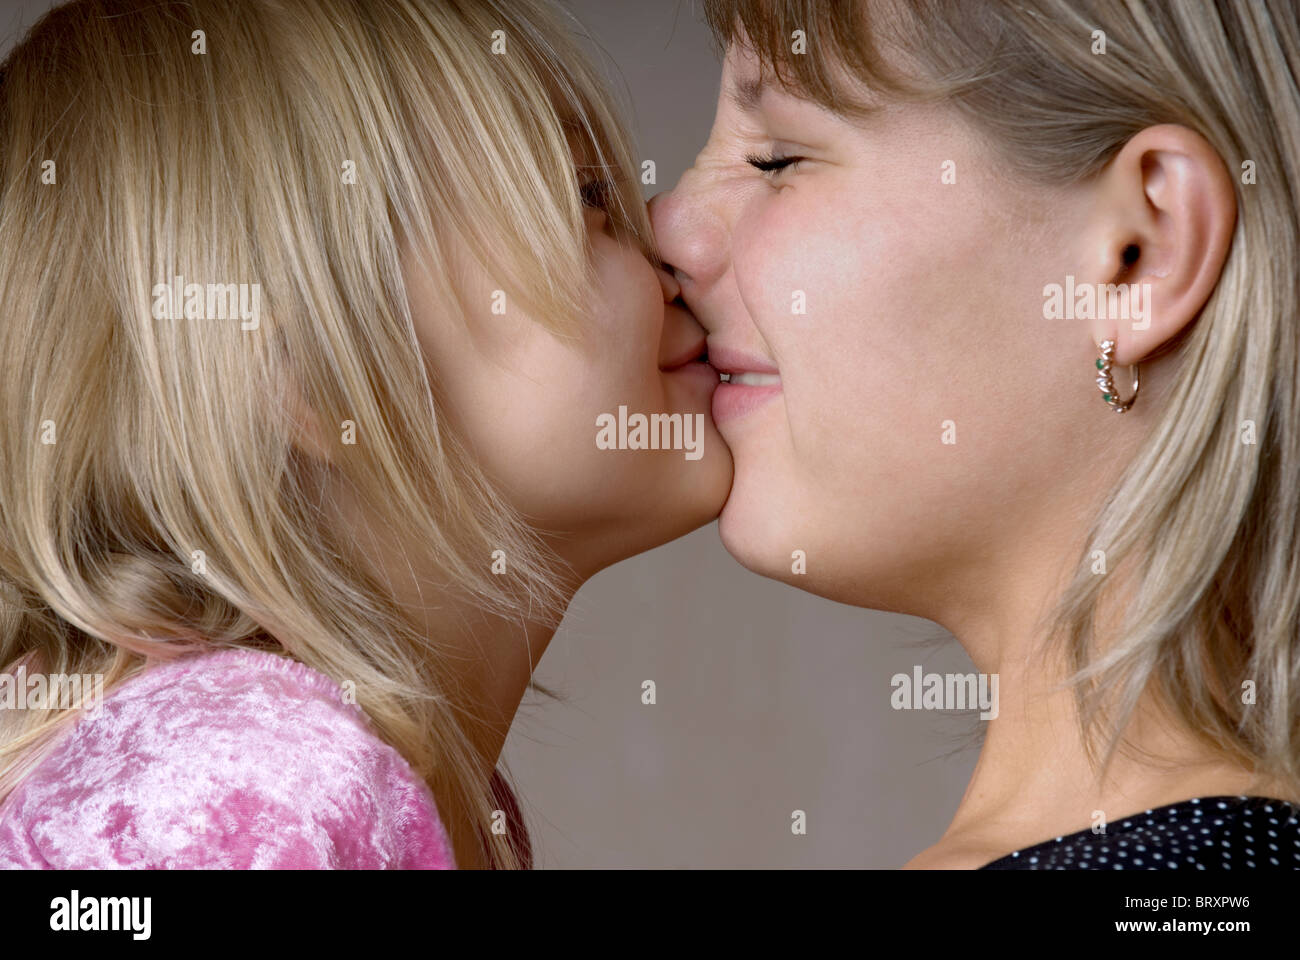 Mom kissing daughter